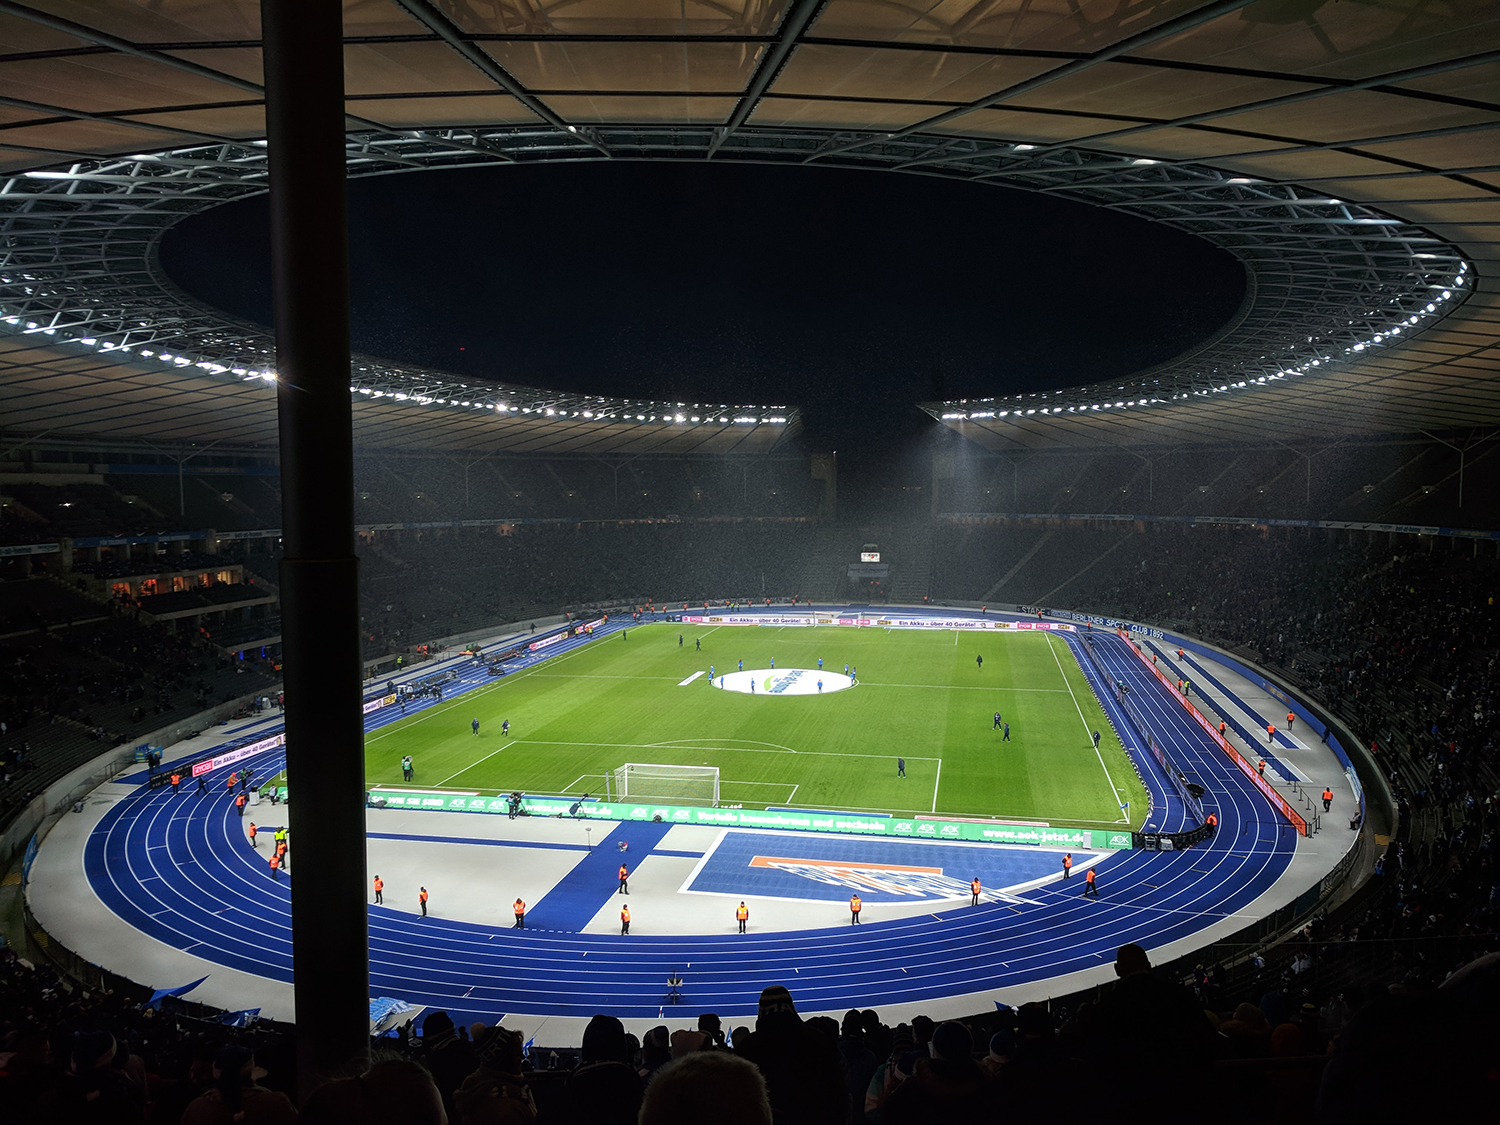 7 Big Advantages of LED Stadium Lights